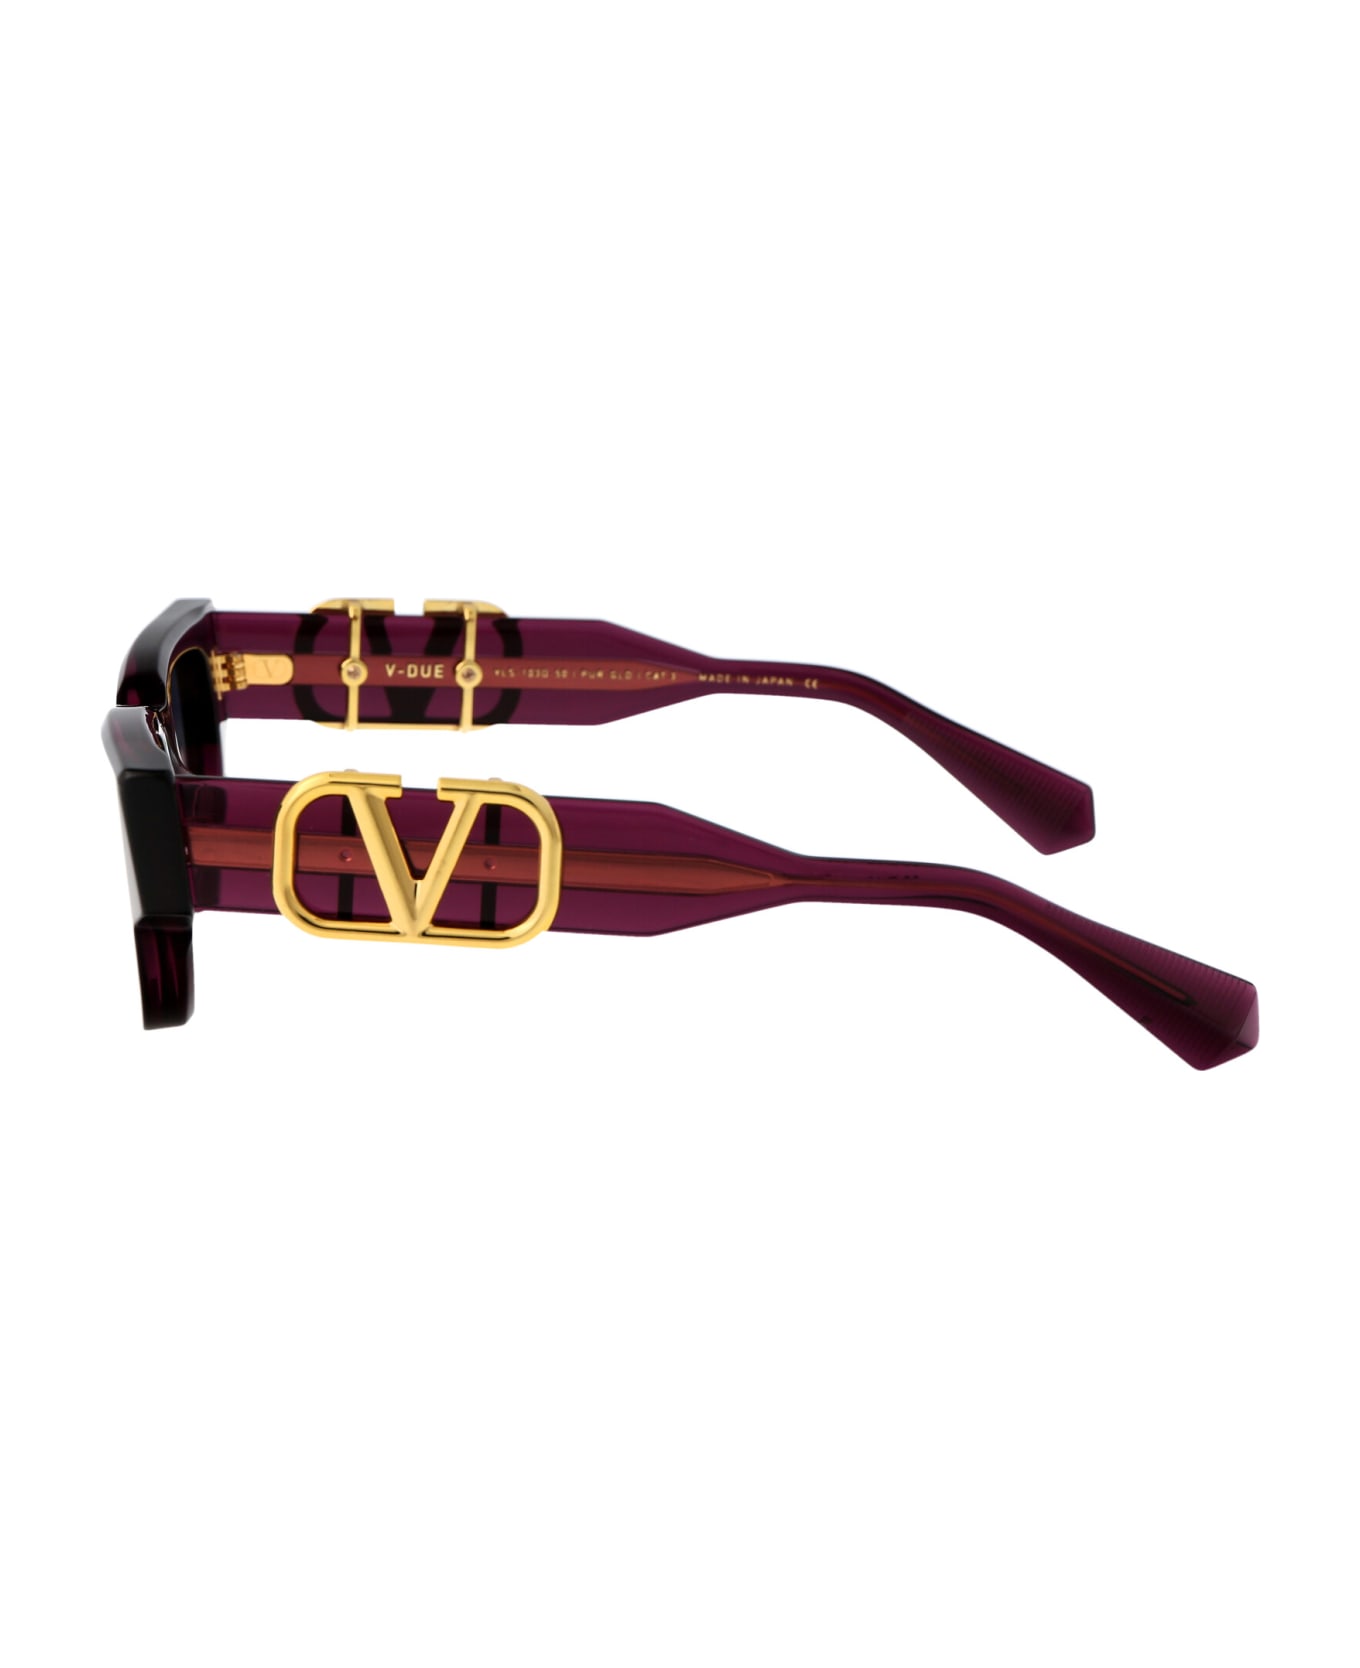 Valentino Eyewear V - Due Sunglasses - 103D PUR - GLD